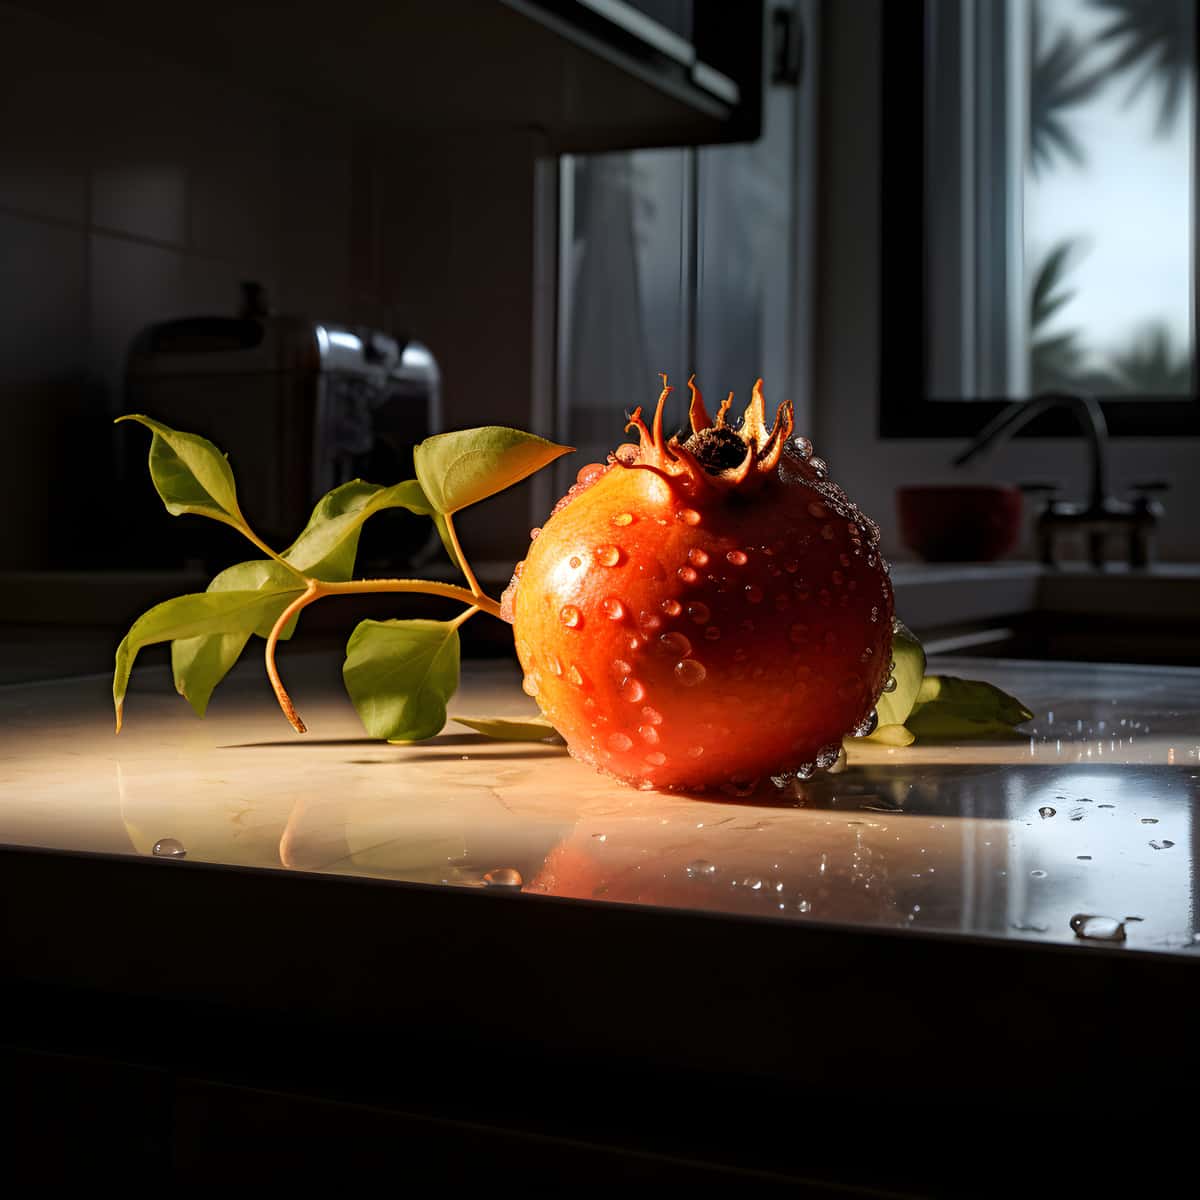 Fibrous Satinash Fruit on a kitchen counter